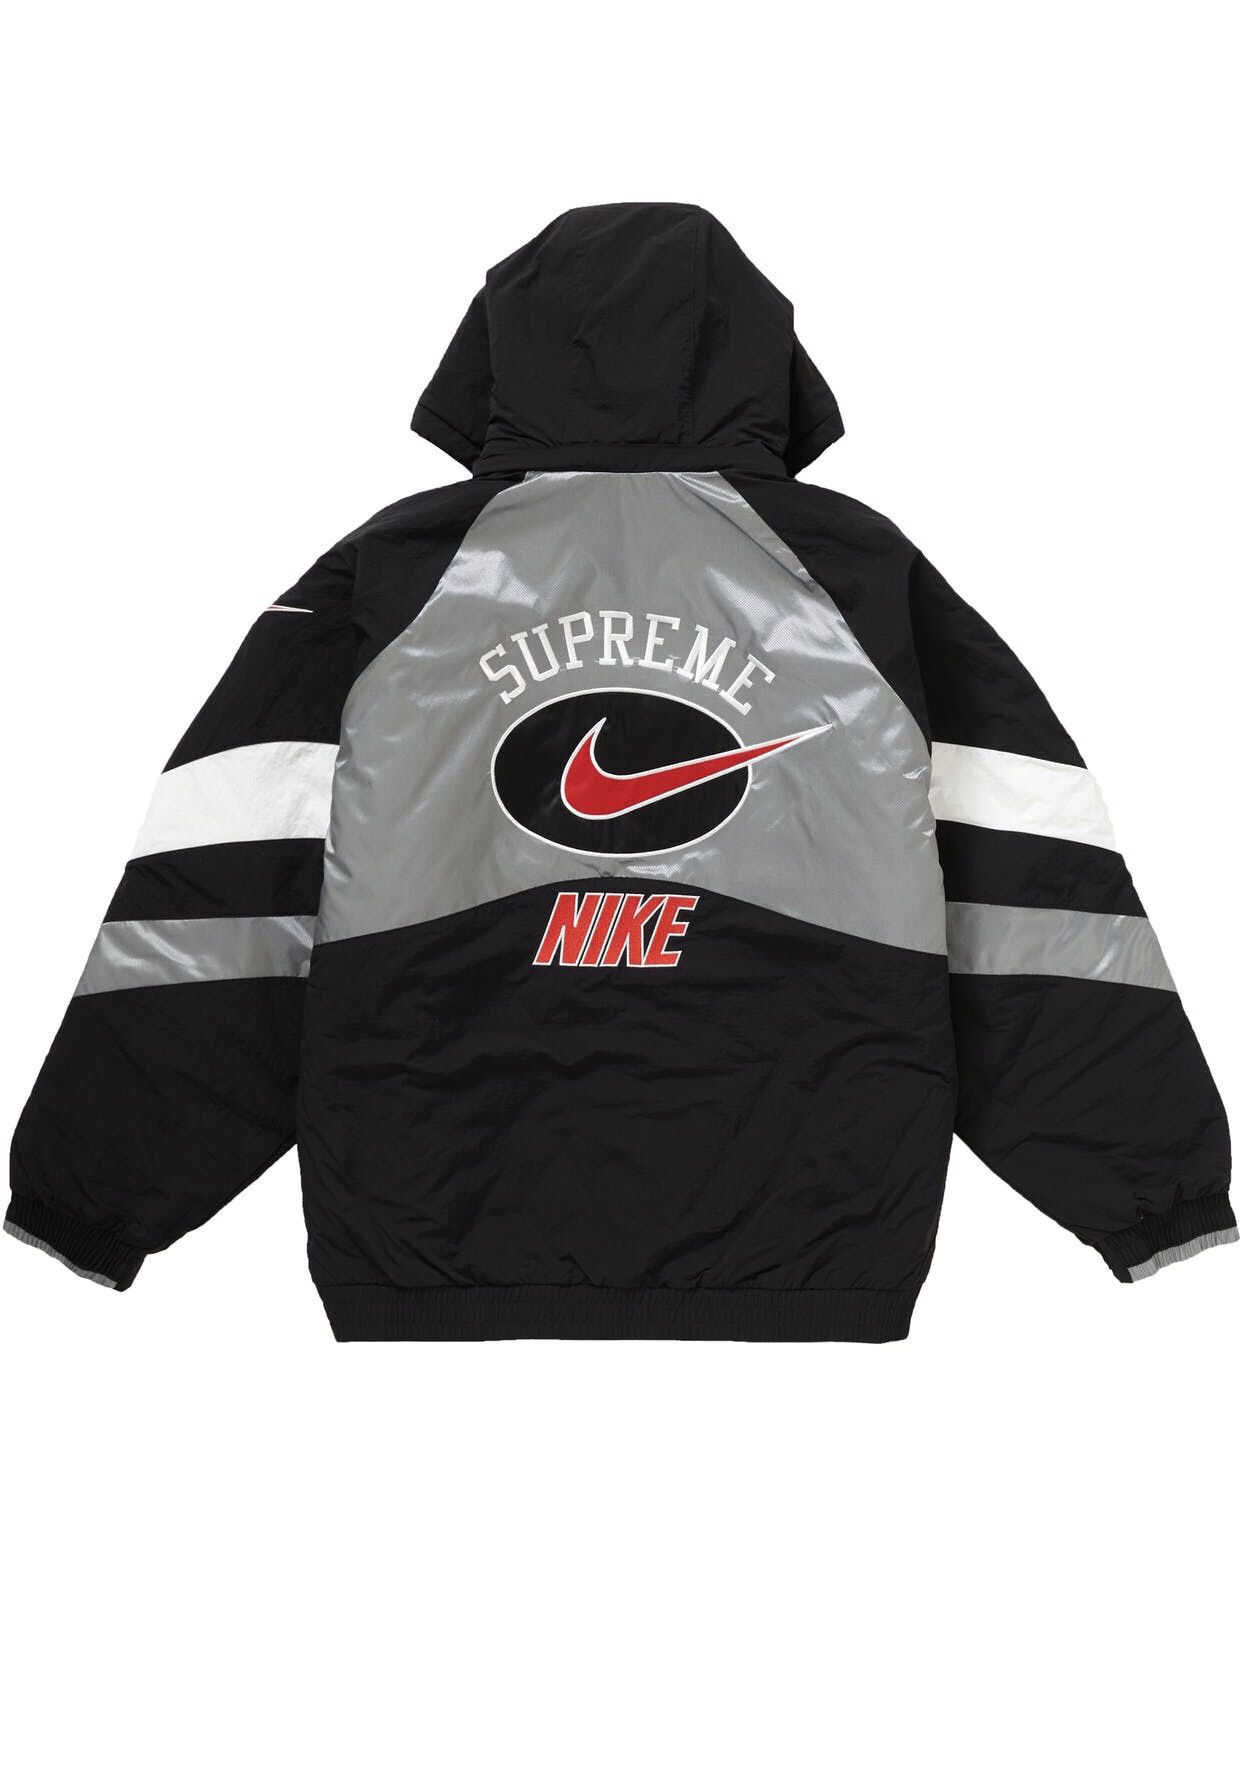 Supreme x Nike Hooded Sport Jacket